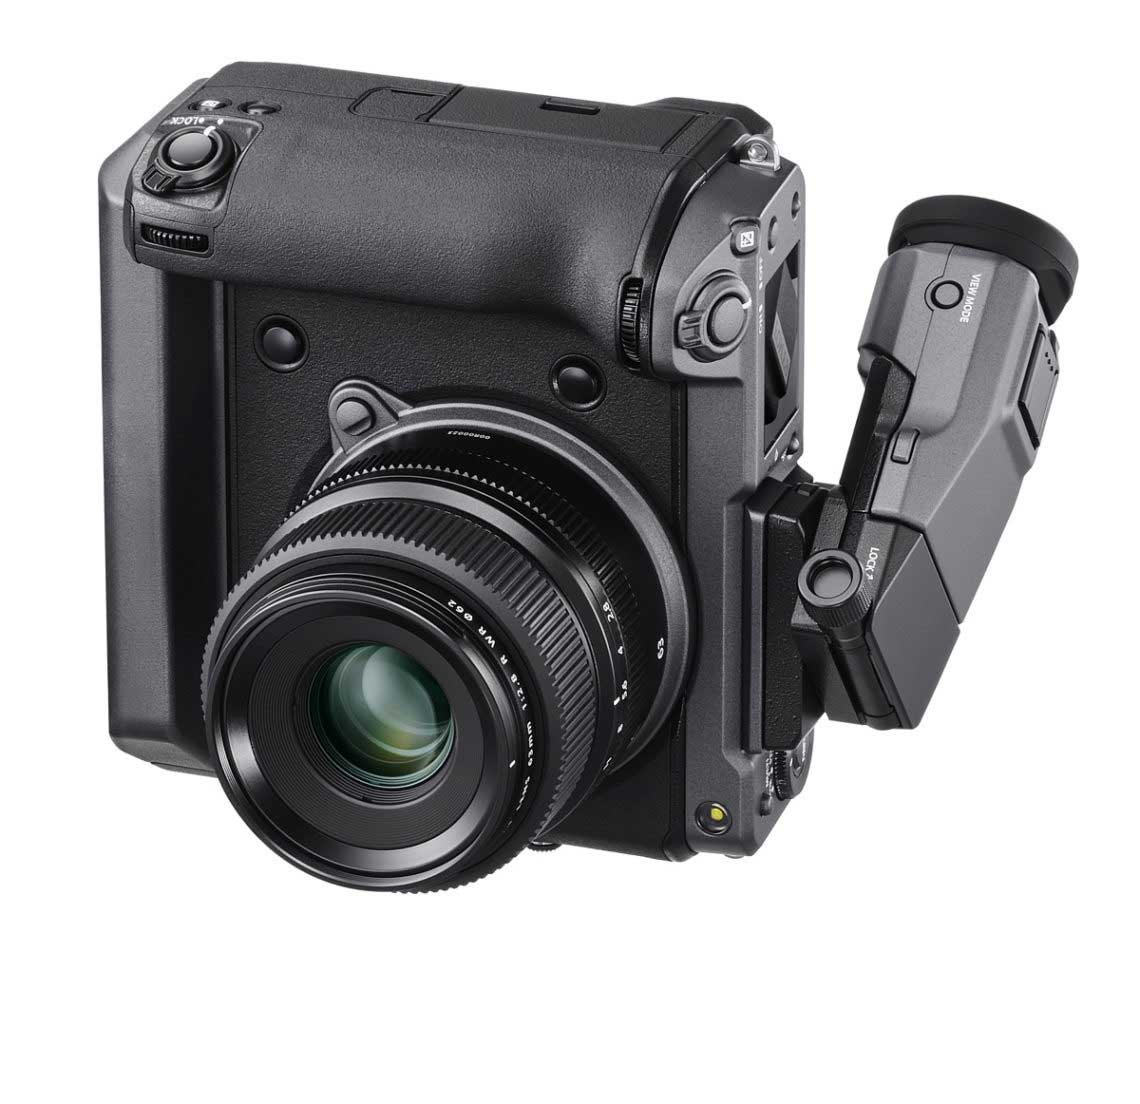 FUJIFILM GFX 100 – Mittelformatkamera mit 102 MP-Sensor und Bildstabilisator